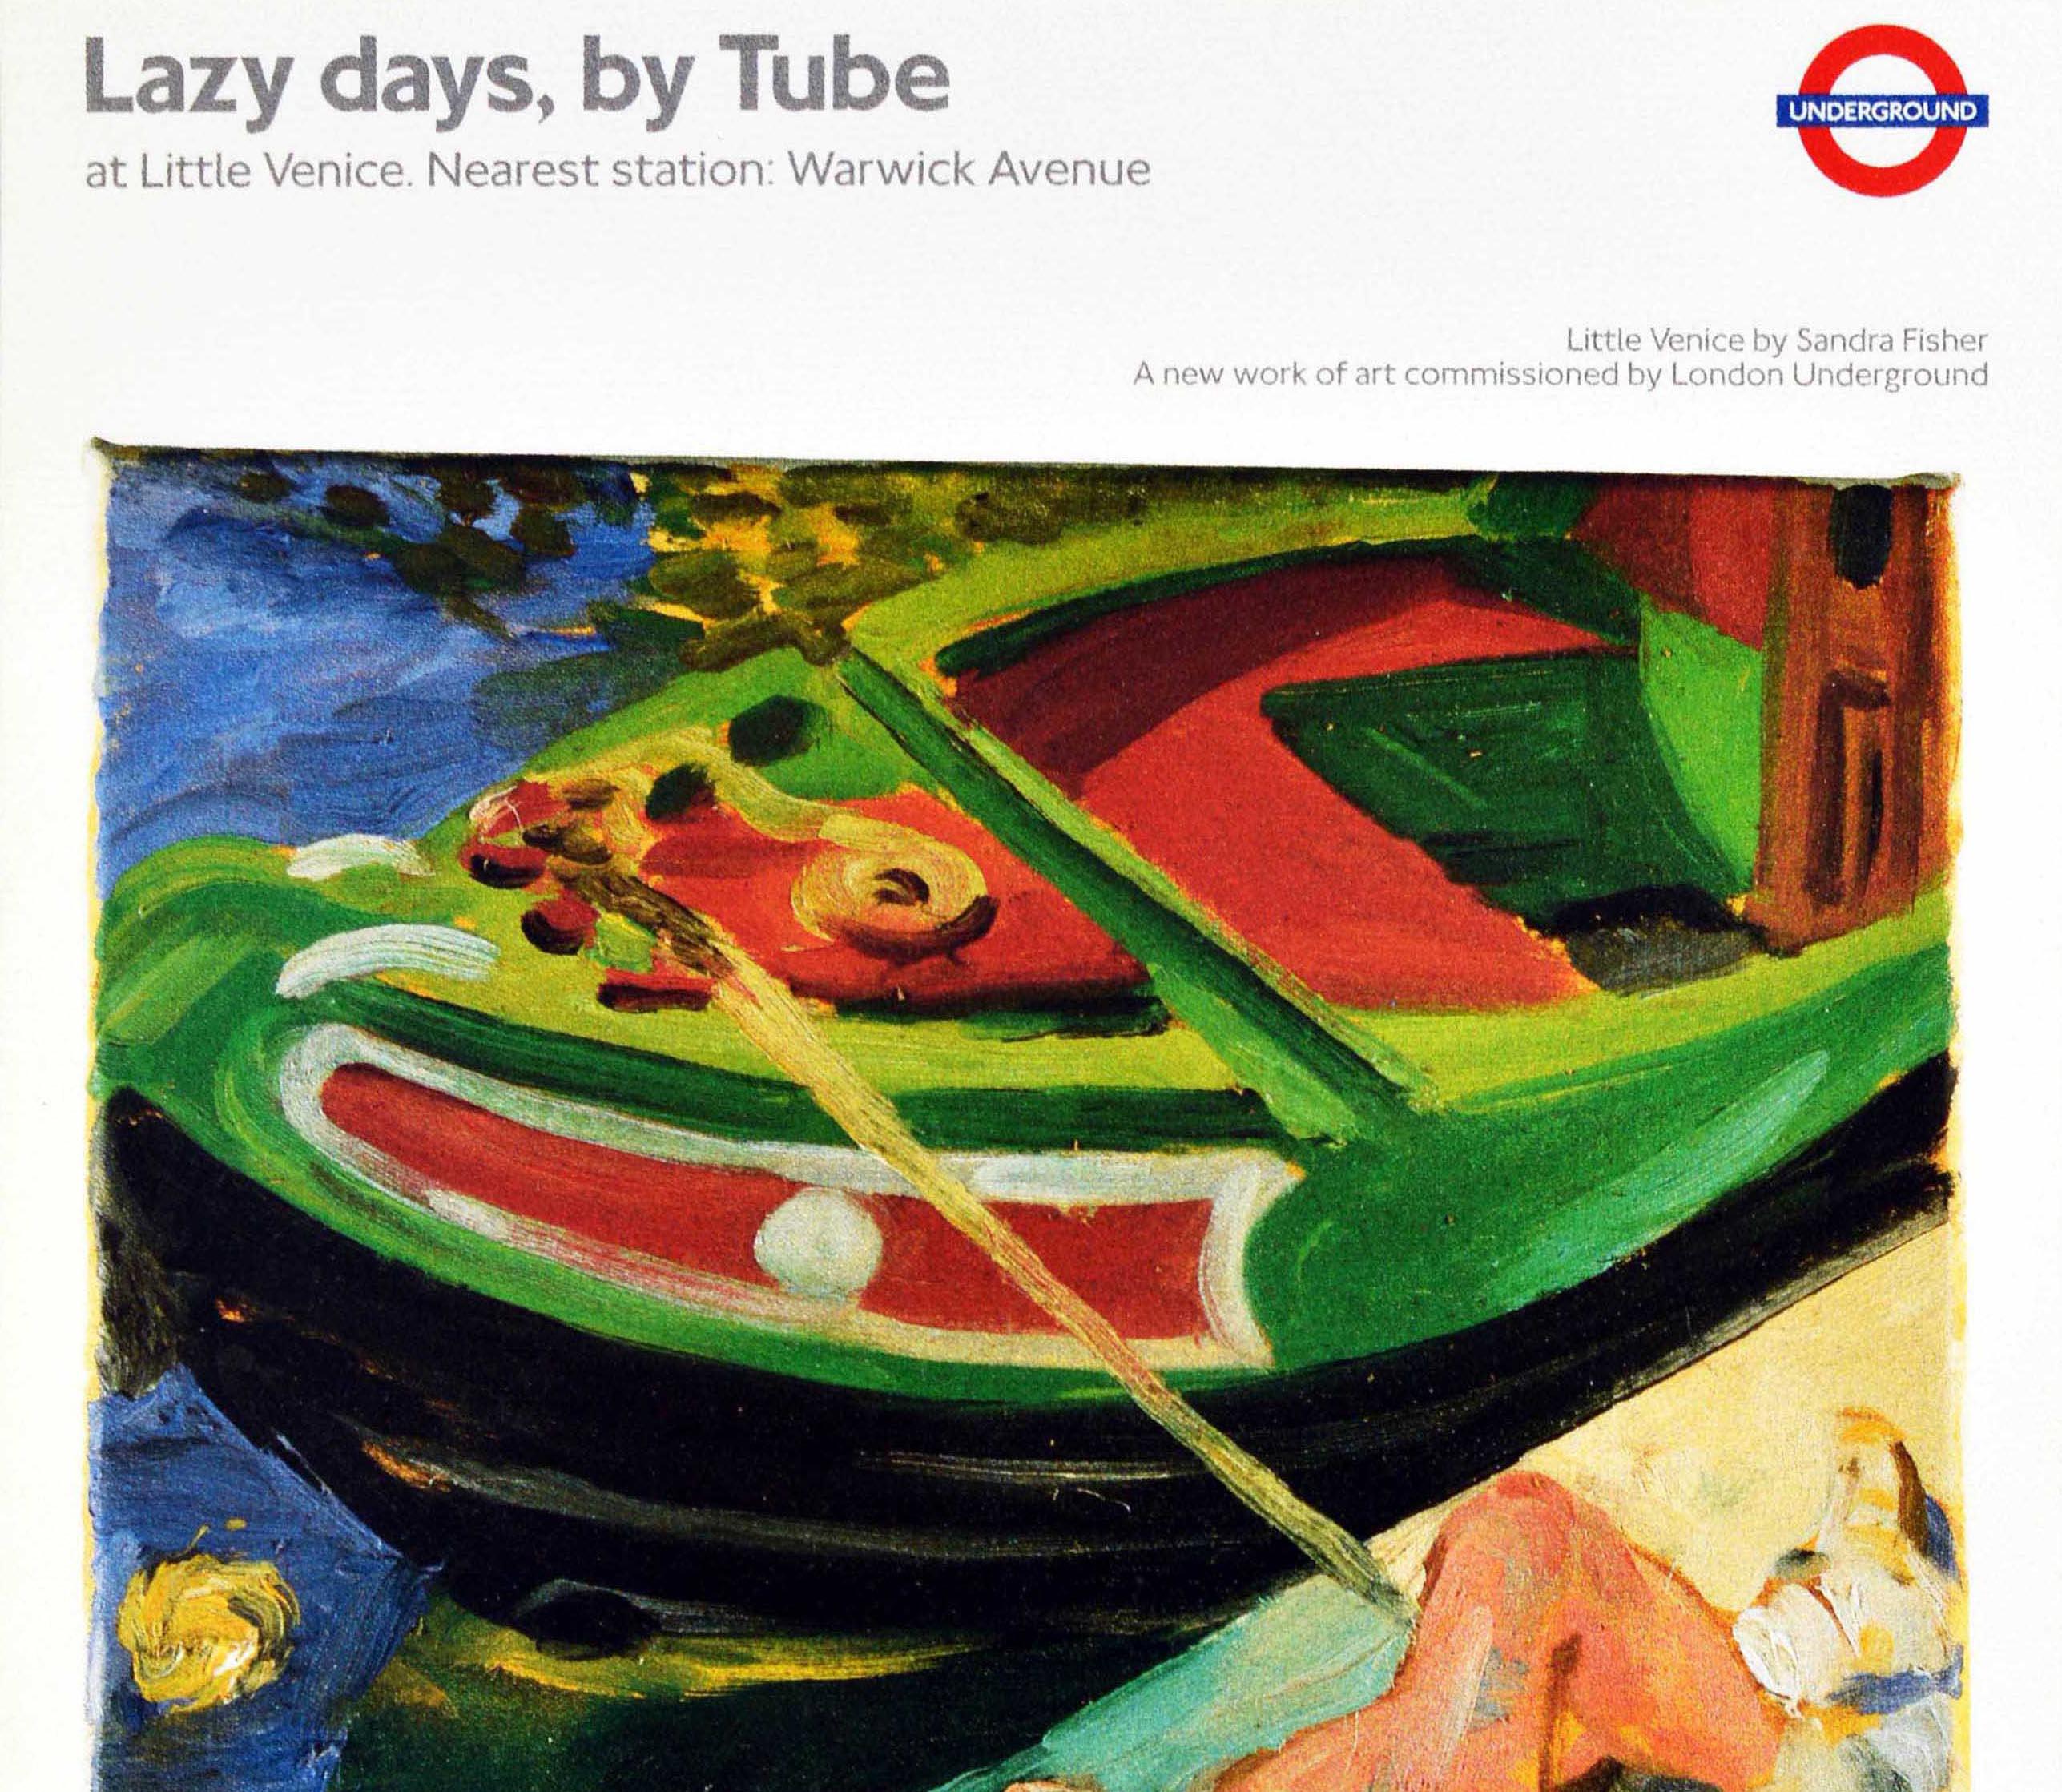 Original Vintage London Underground Poster Lazy Days By Tube Little Venice LT - Beige Print by Unknown